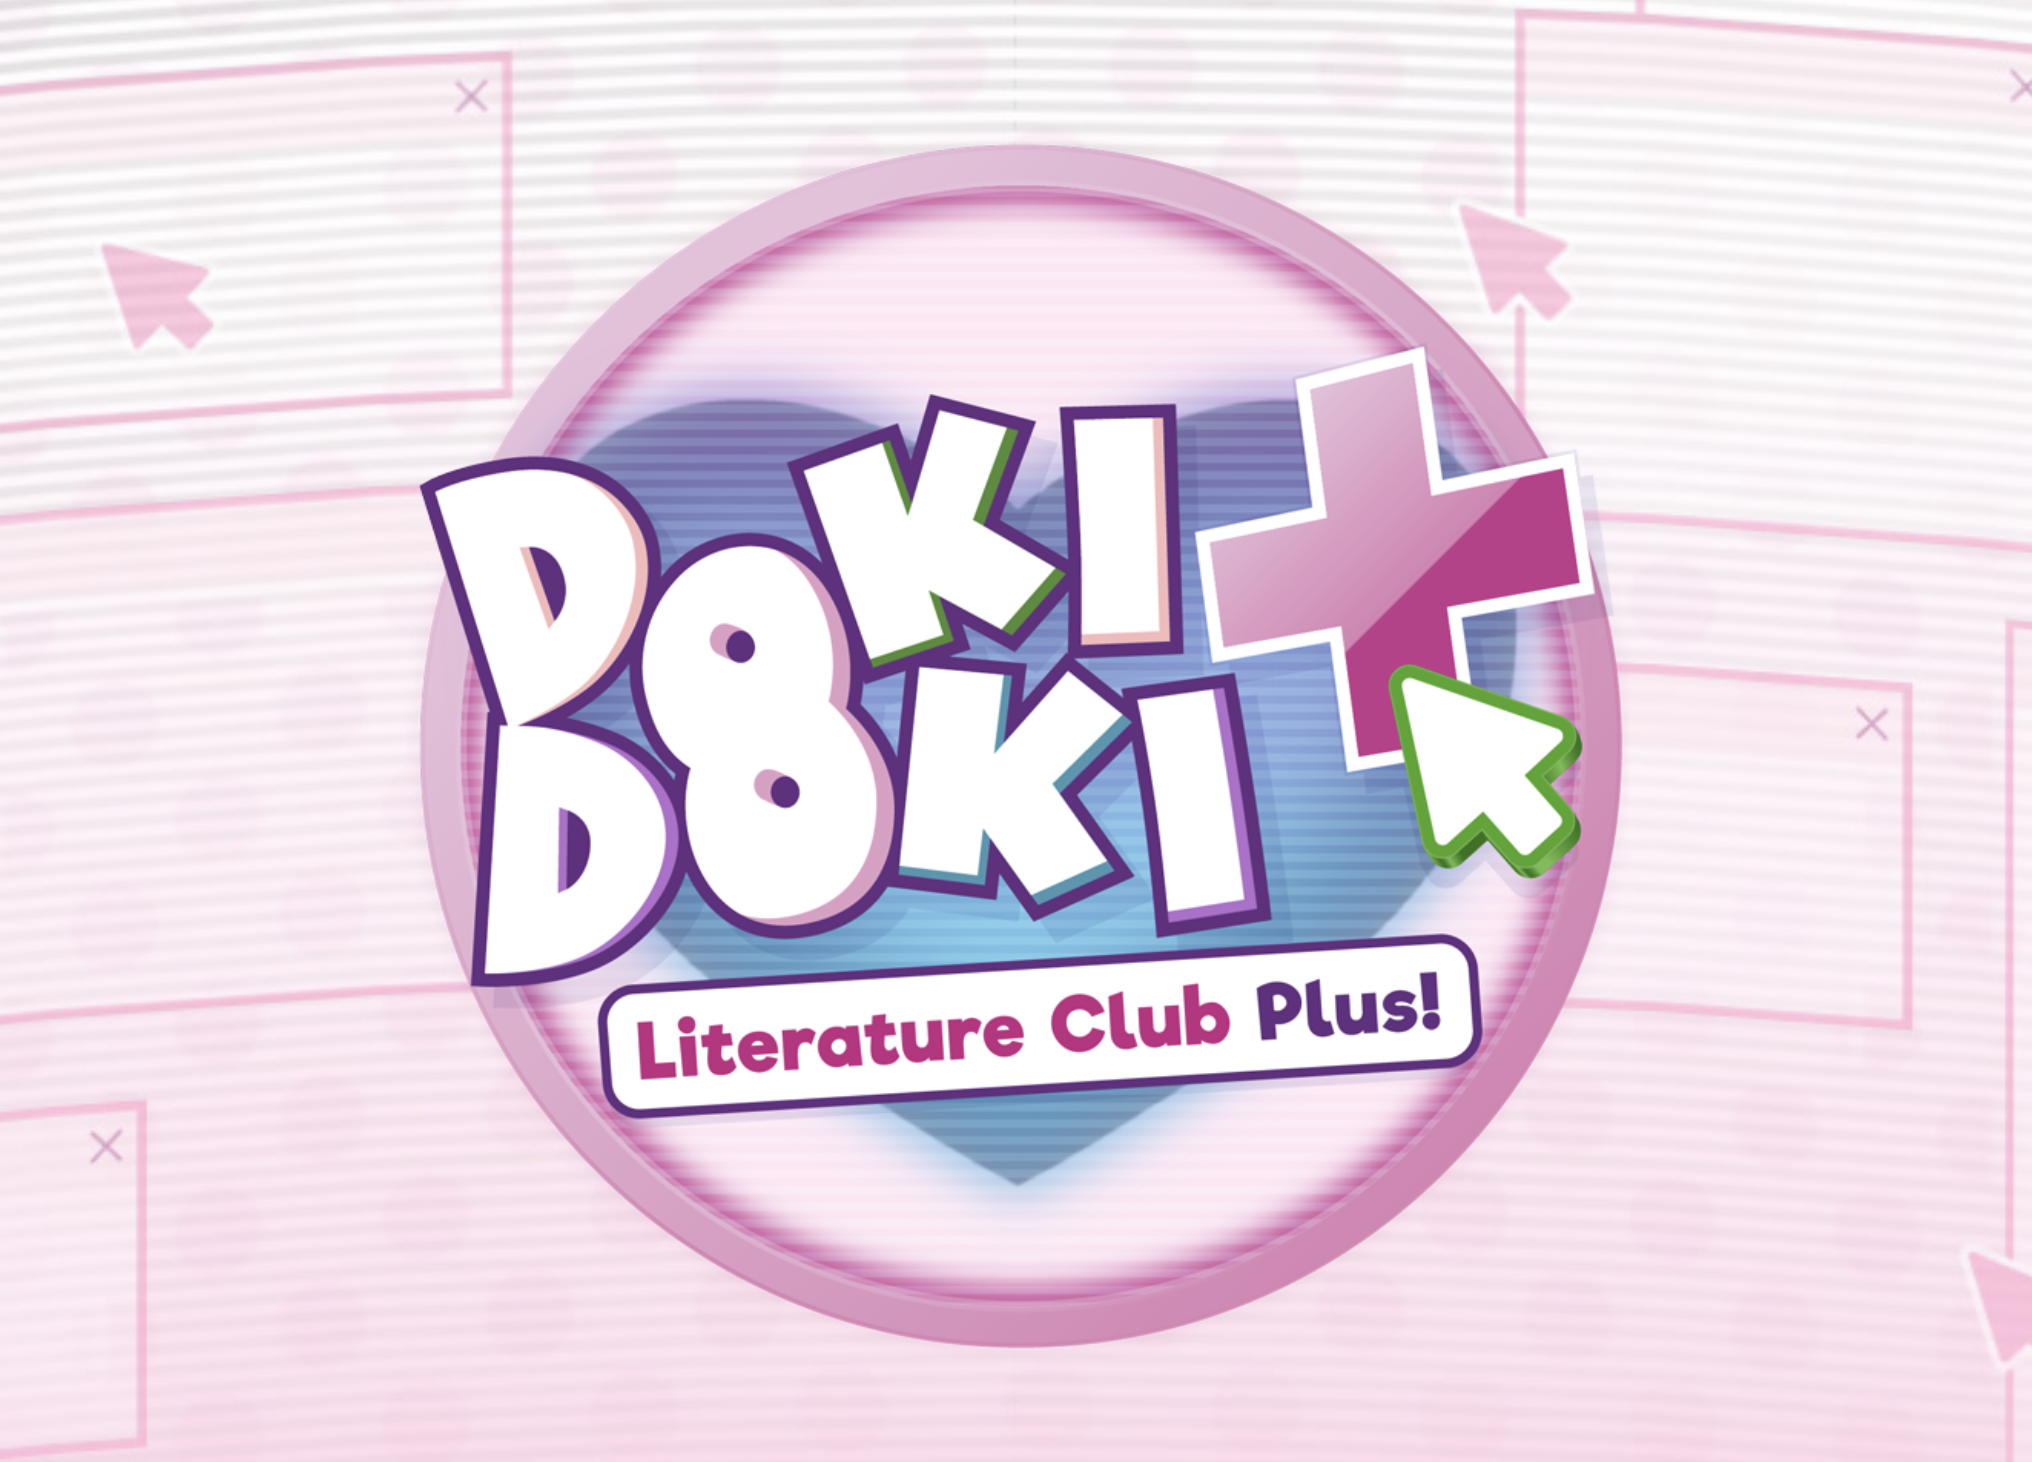 X35 Earthwalker Doki Doki Literature Club Plus!